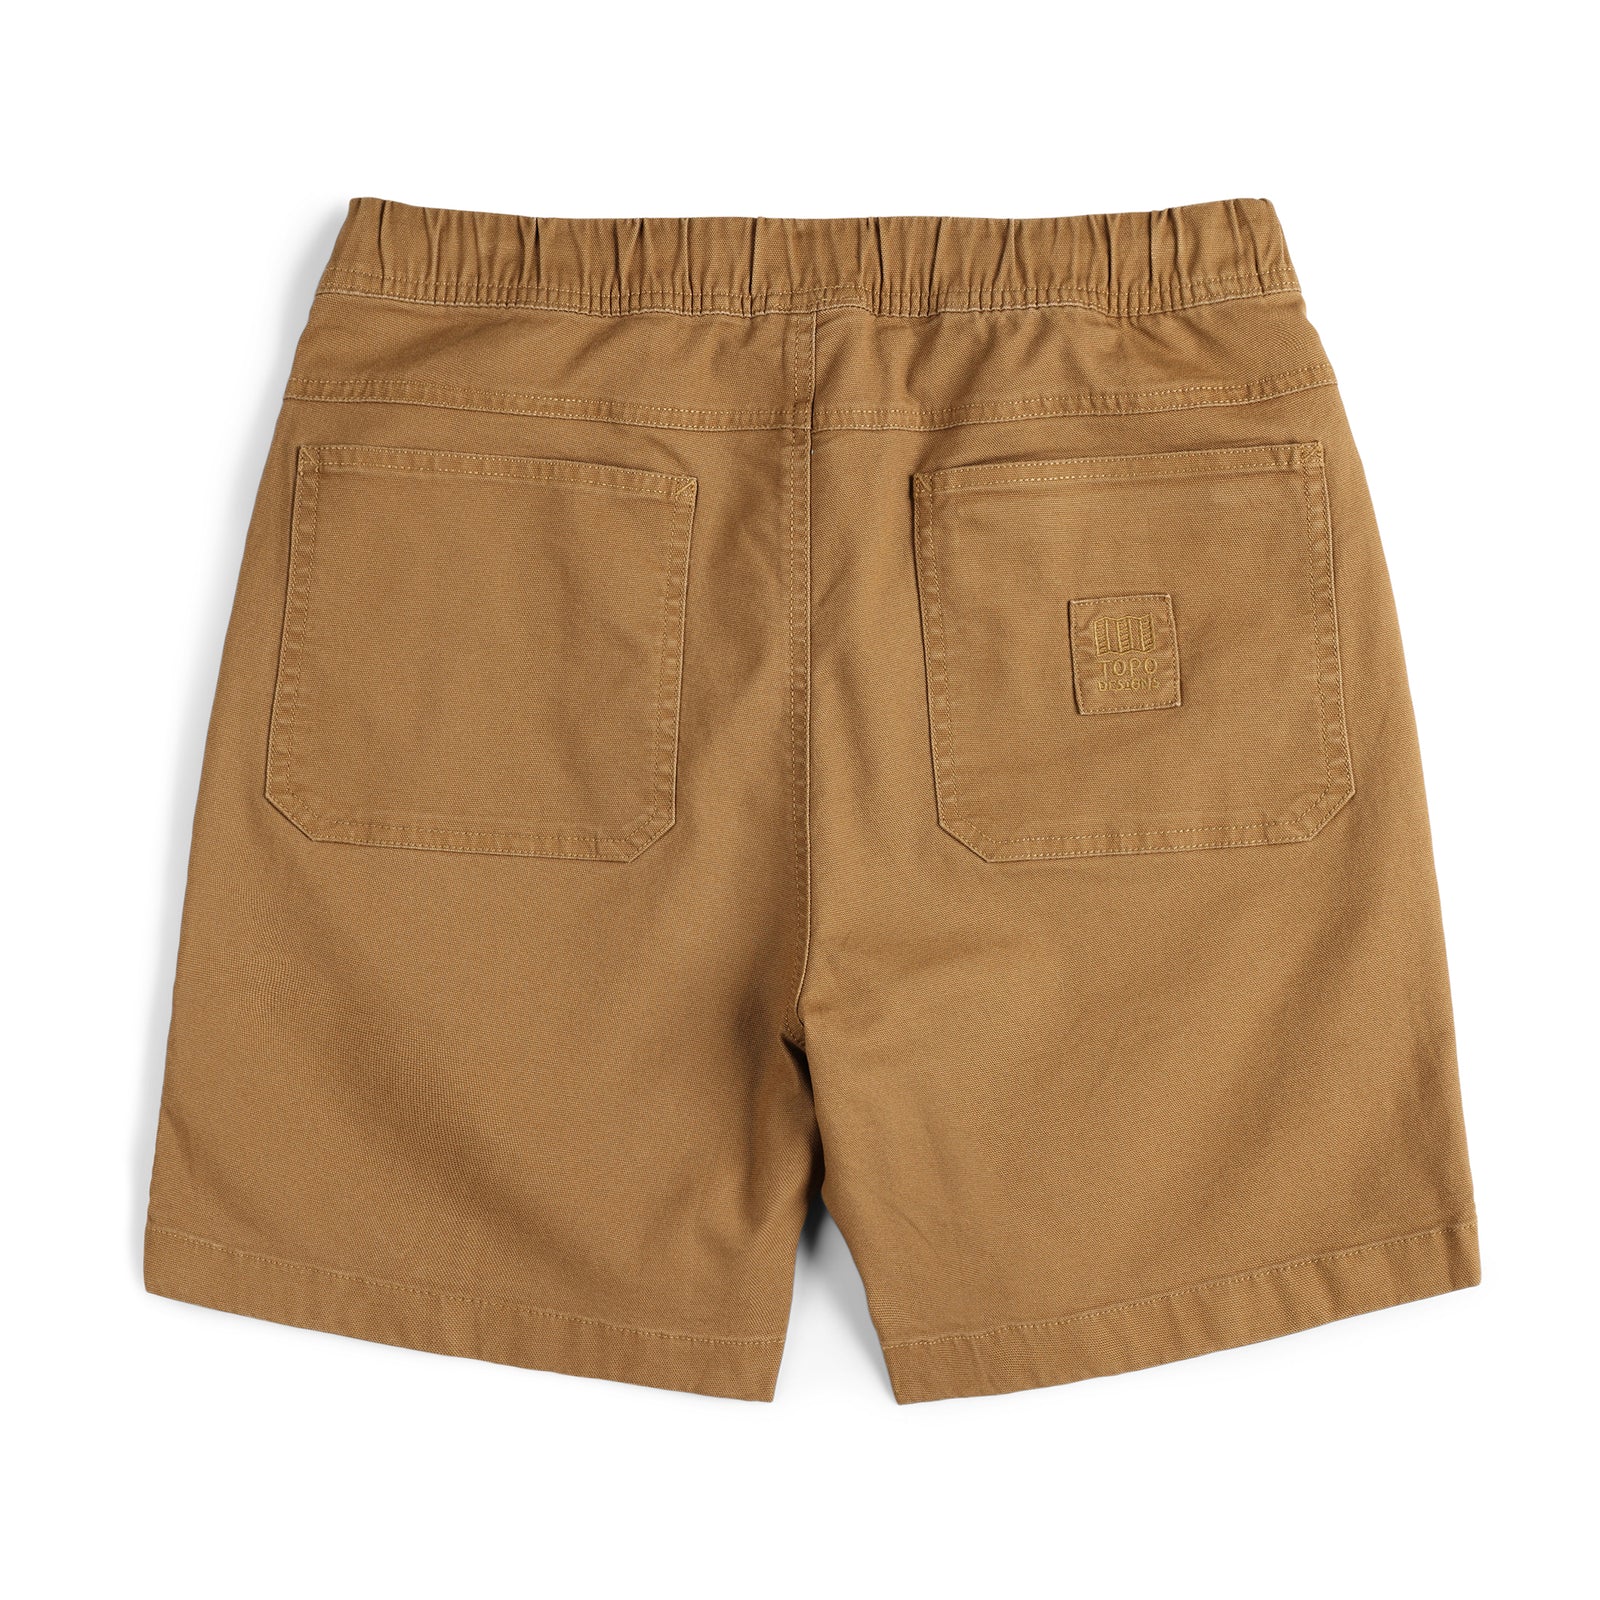 Back View of Topo Designs Dirt Shorts - Men's in "Dark Khaki"